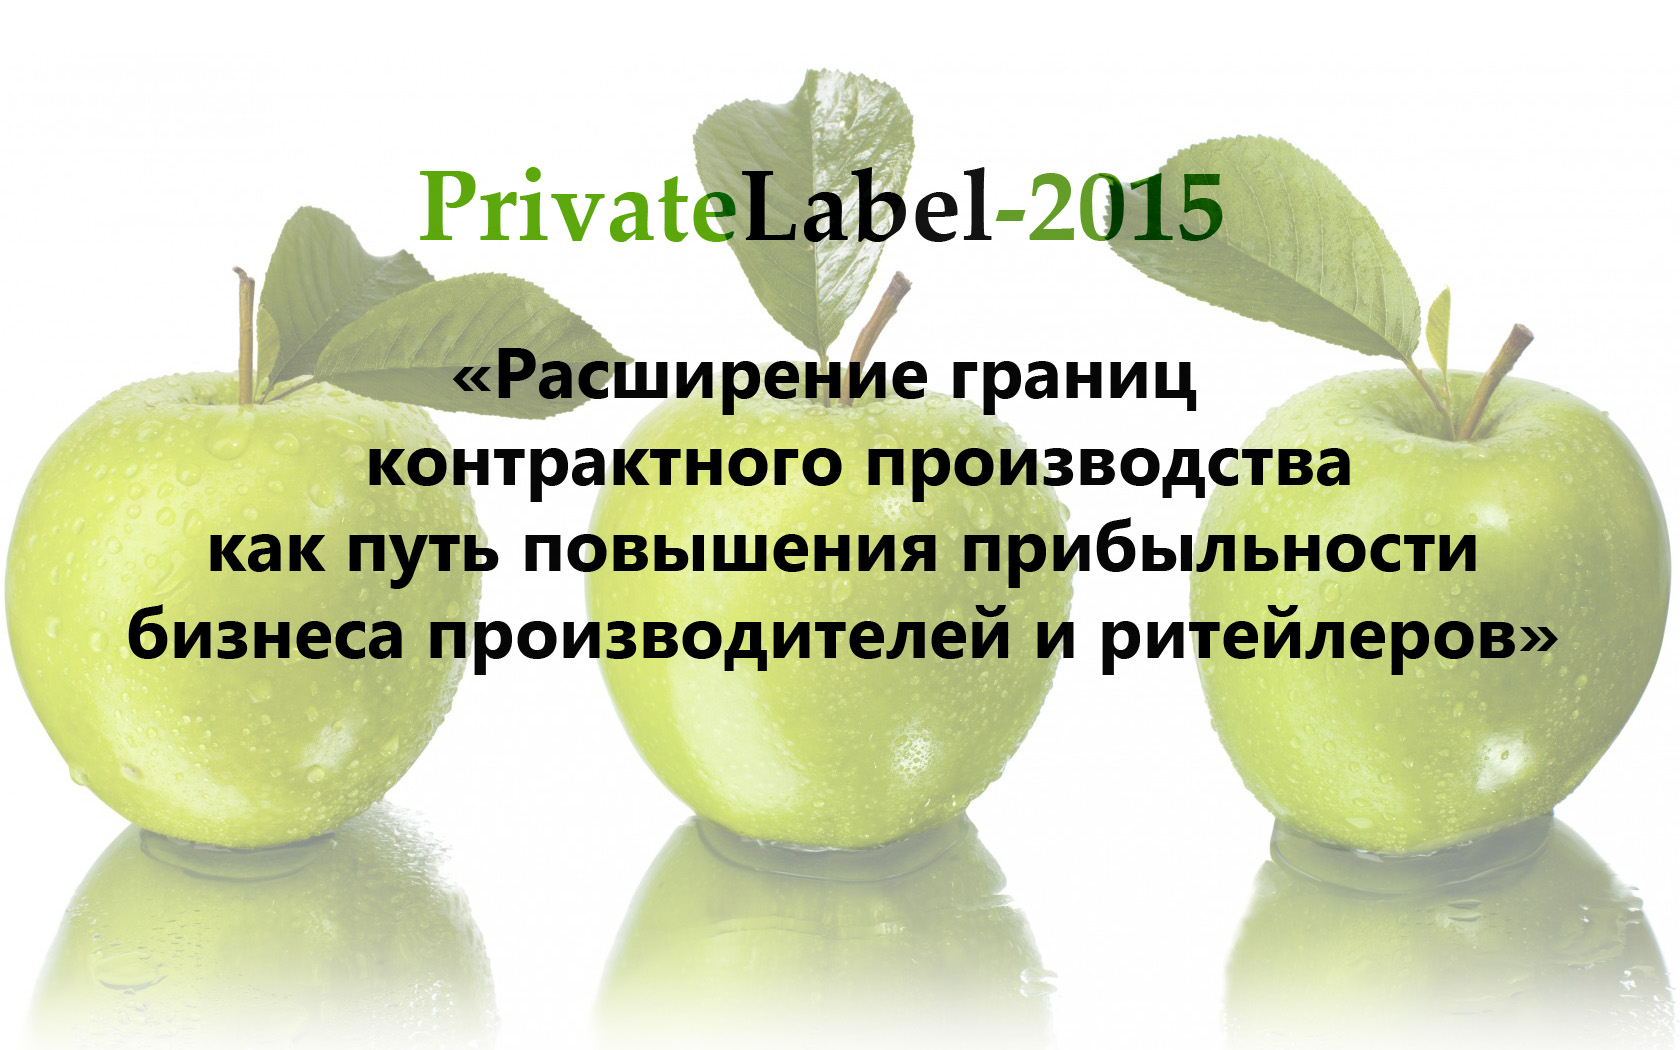 PrivateLabel - 2015:  Расширение границ контрактного производства  